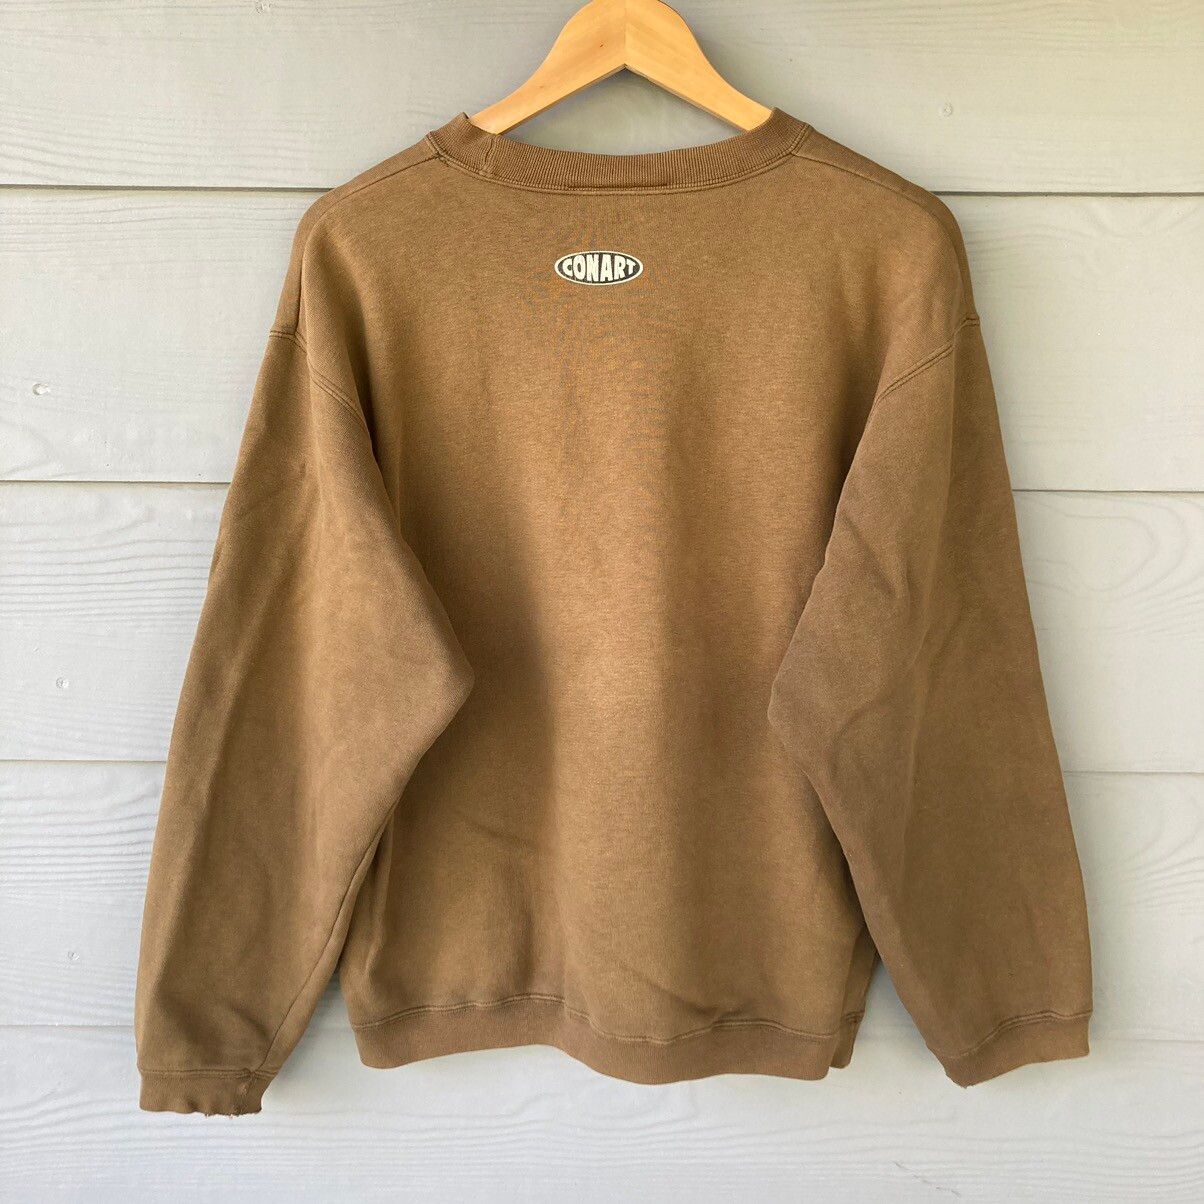 Vintage Conart Sweatshirt Size L - 9